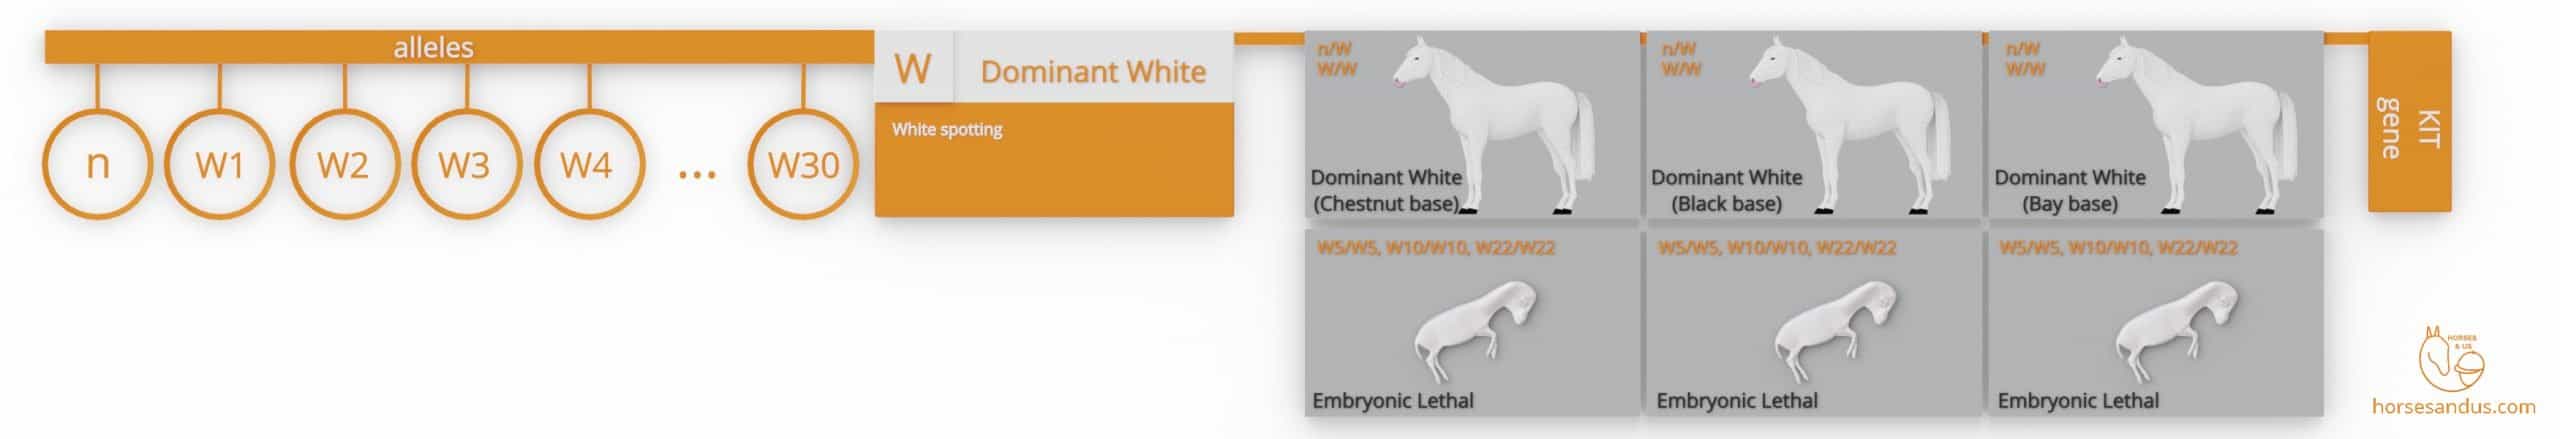 Dominant white horse genes